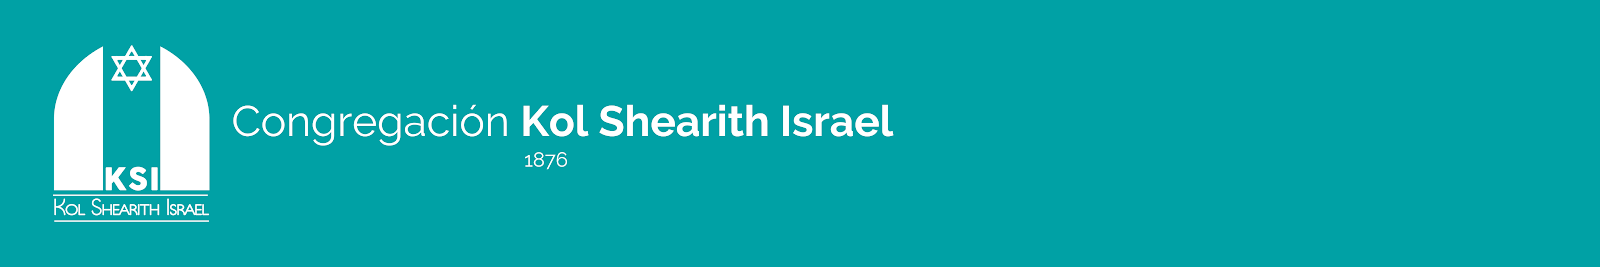 Congregacion Kol Shearith Israel - Blog